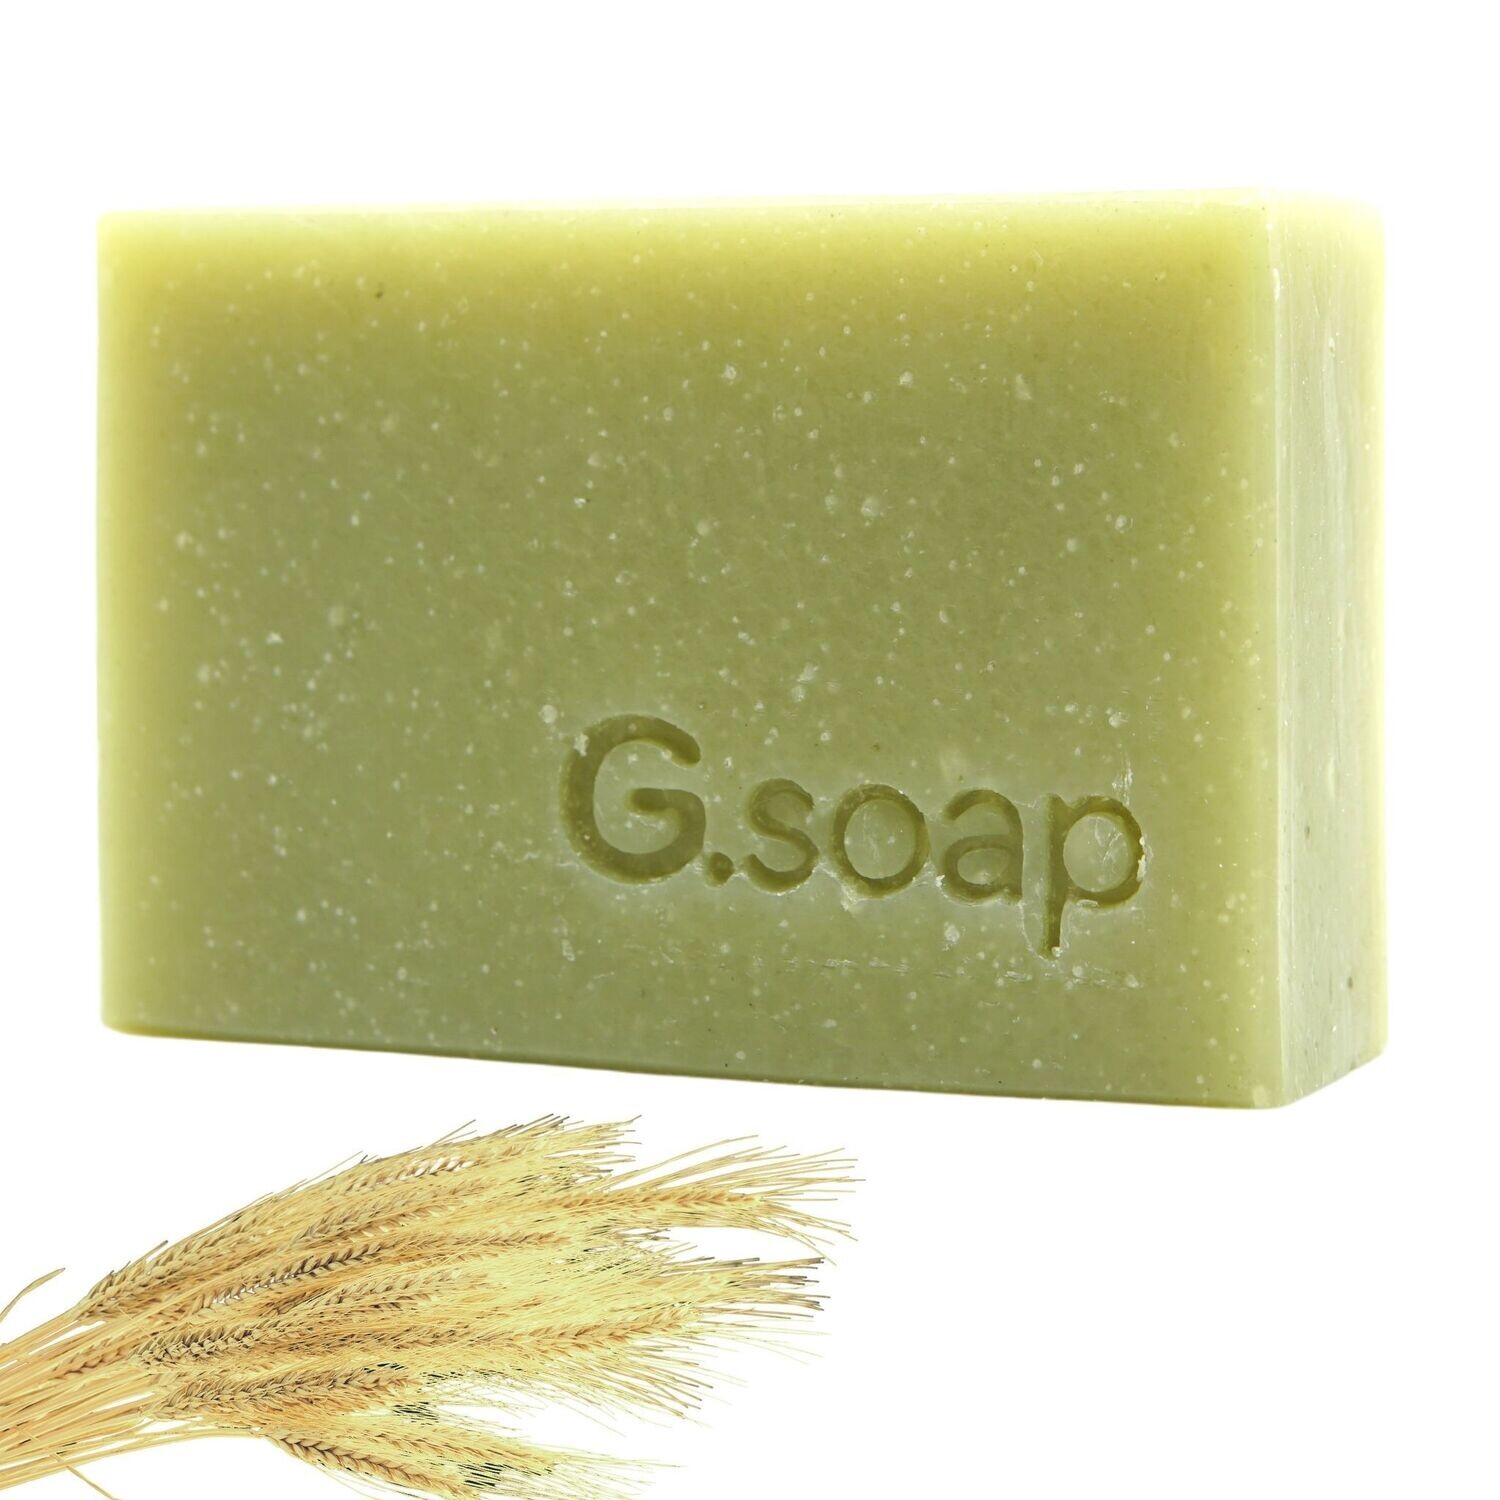 G.soap Boricha | French Green Clay & Korean Barley Tea Soap Bar